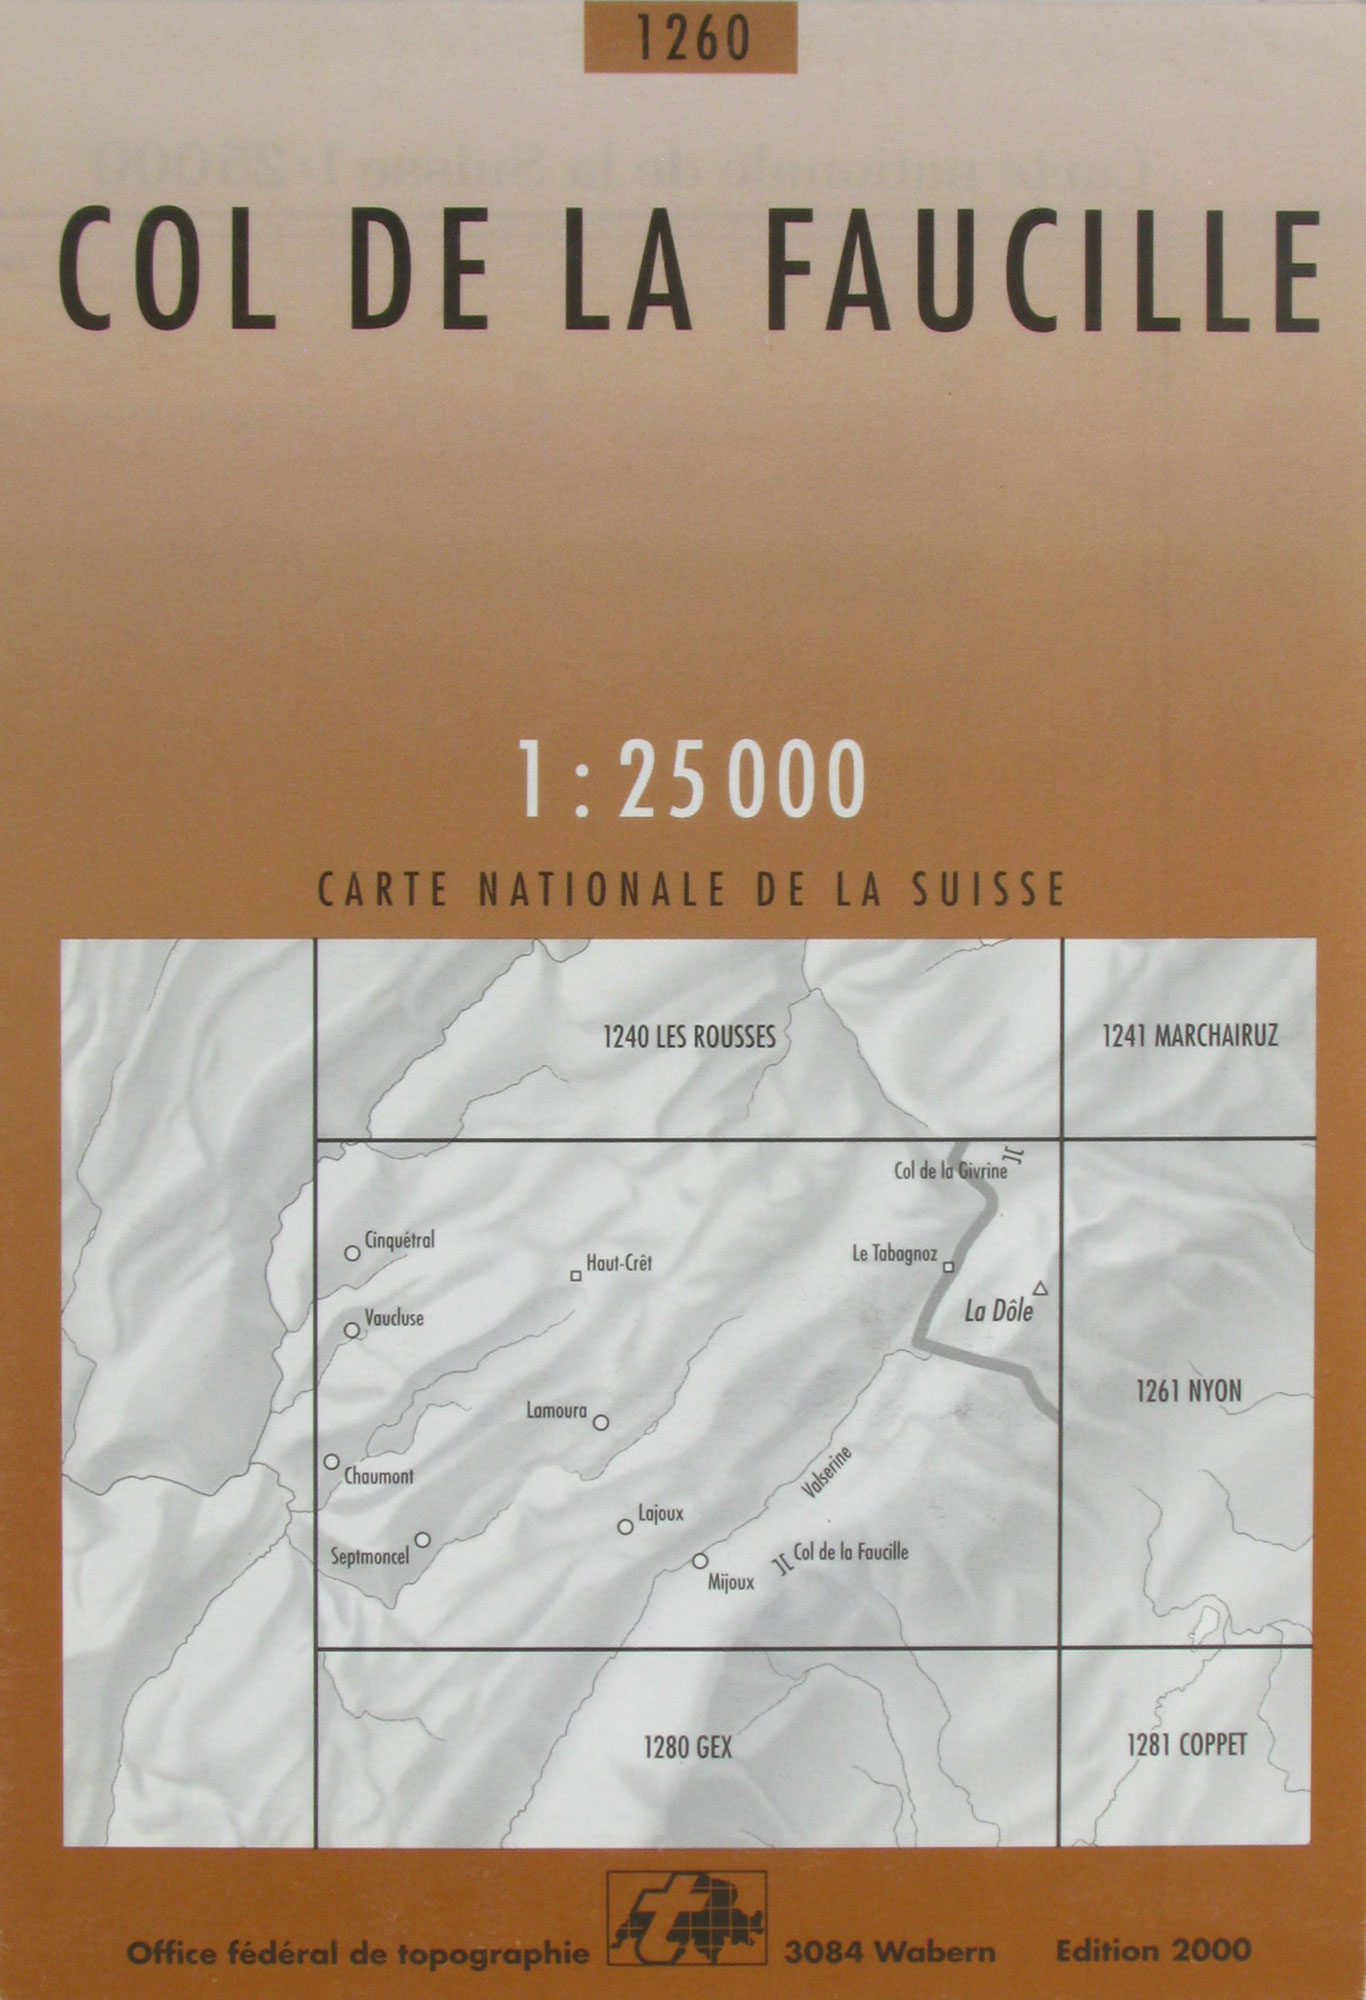   Carte Nationale de la Suisse. Col de la Faucille (Blatt 1260) 